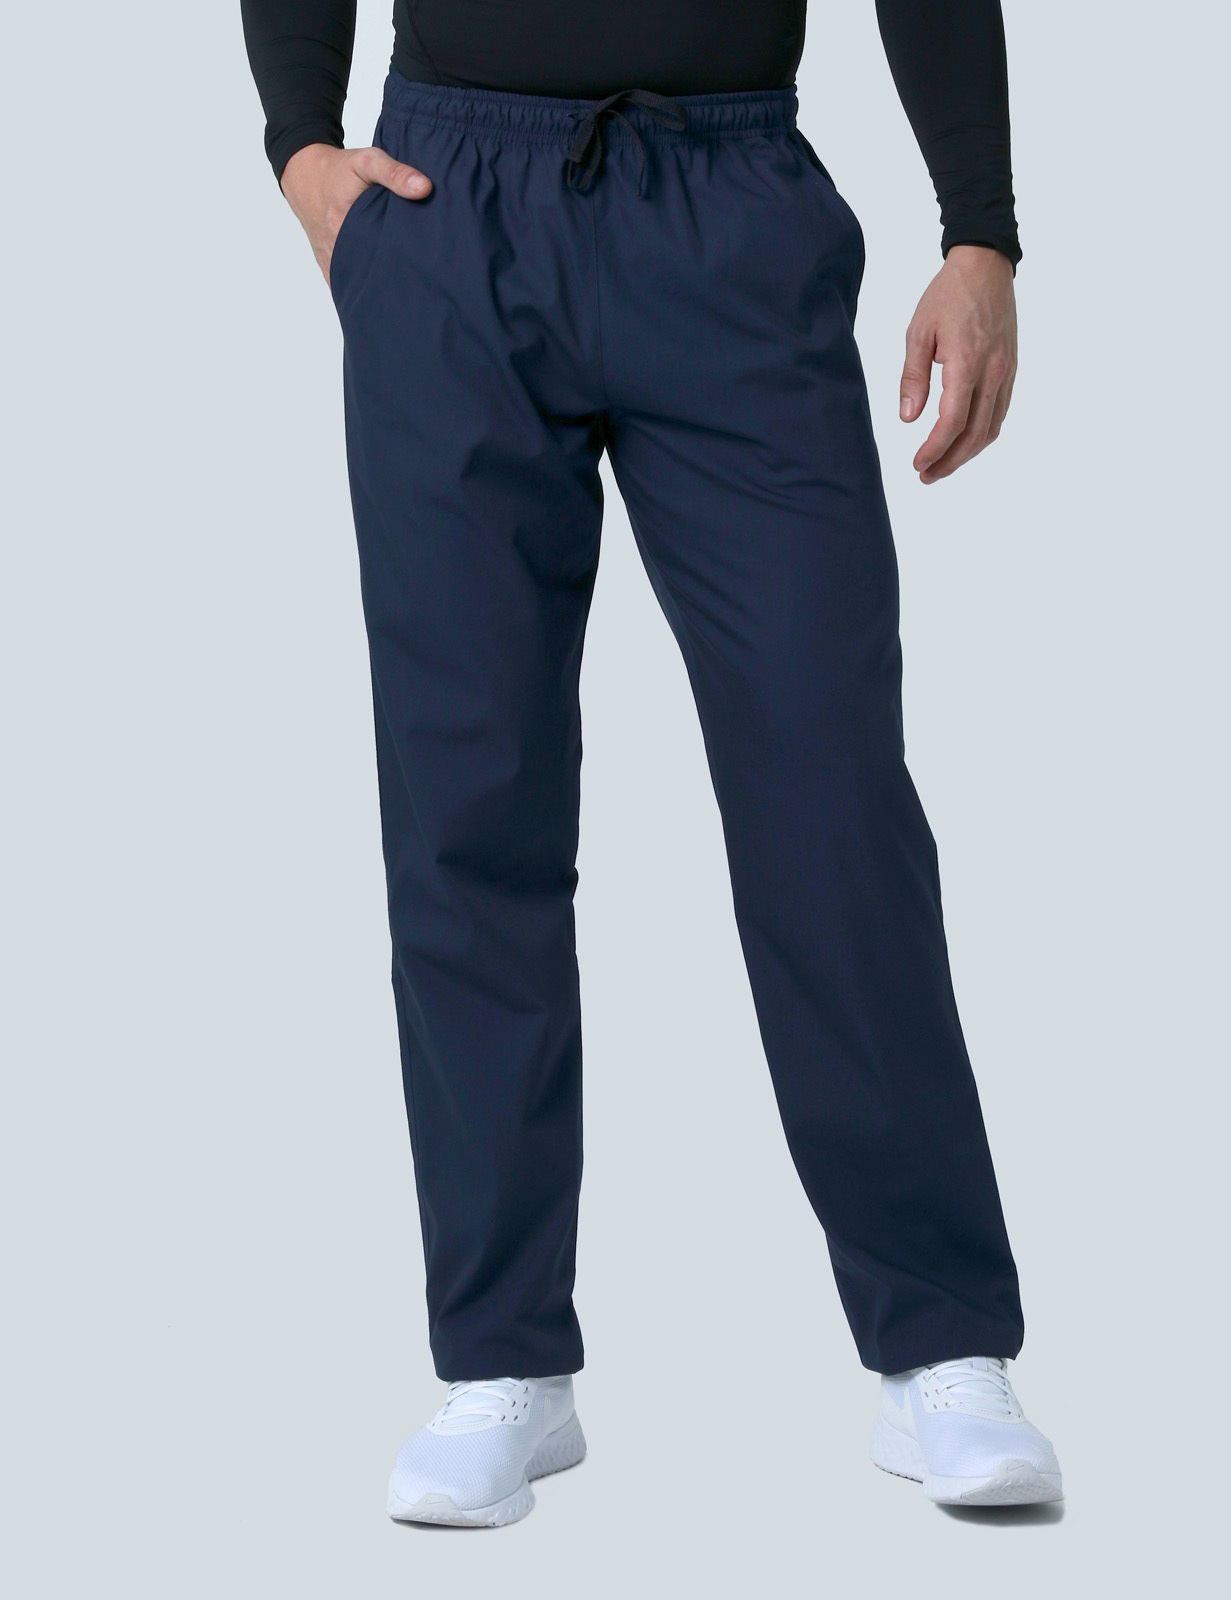 Men's Regular Cut Pants - Navy - XX Small